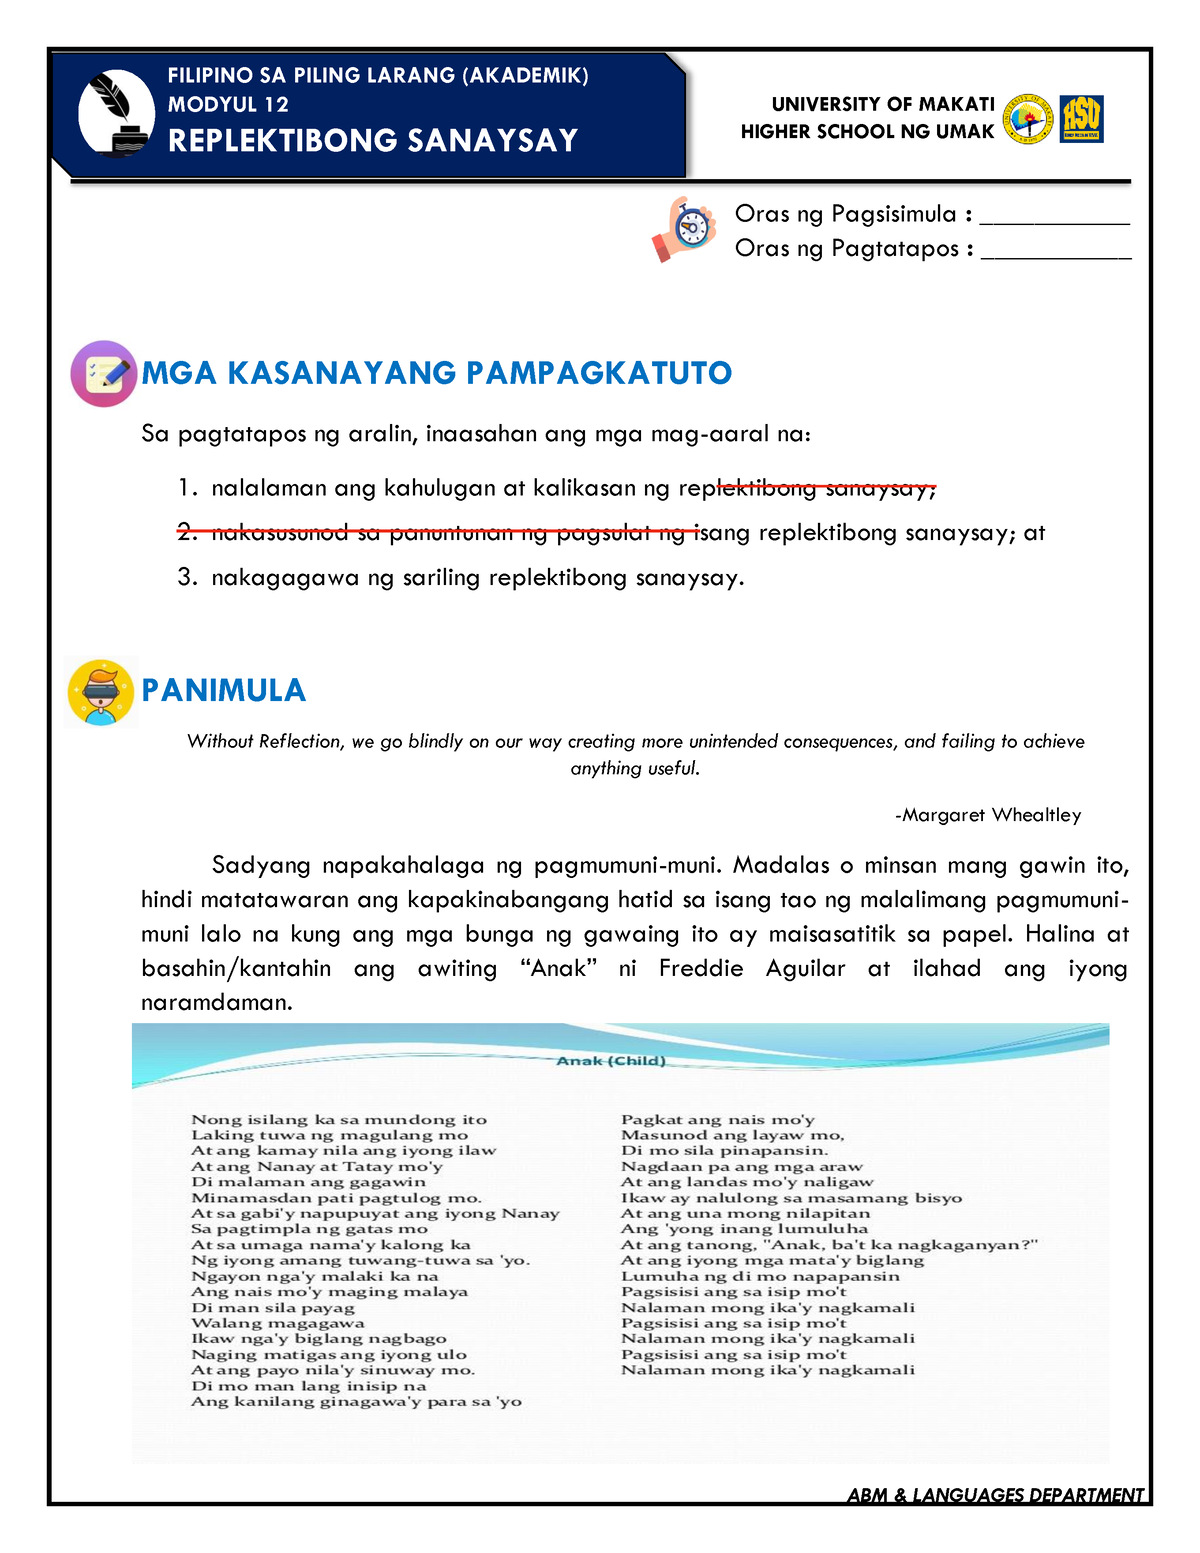 Module 12 Replektibong Sanaysay Filipino Sa Piling Larang Akademik Modyul 12 Replektibong 2224